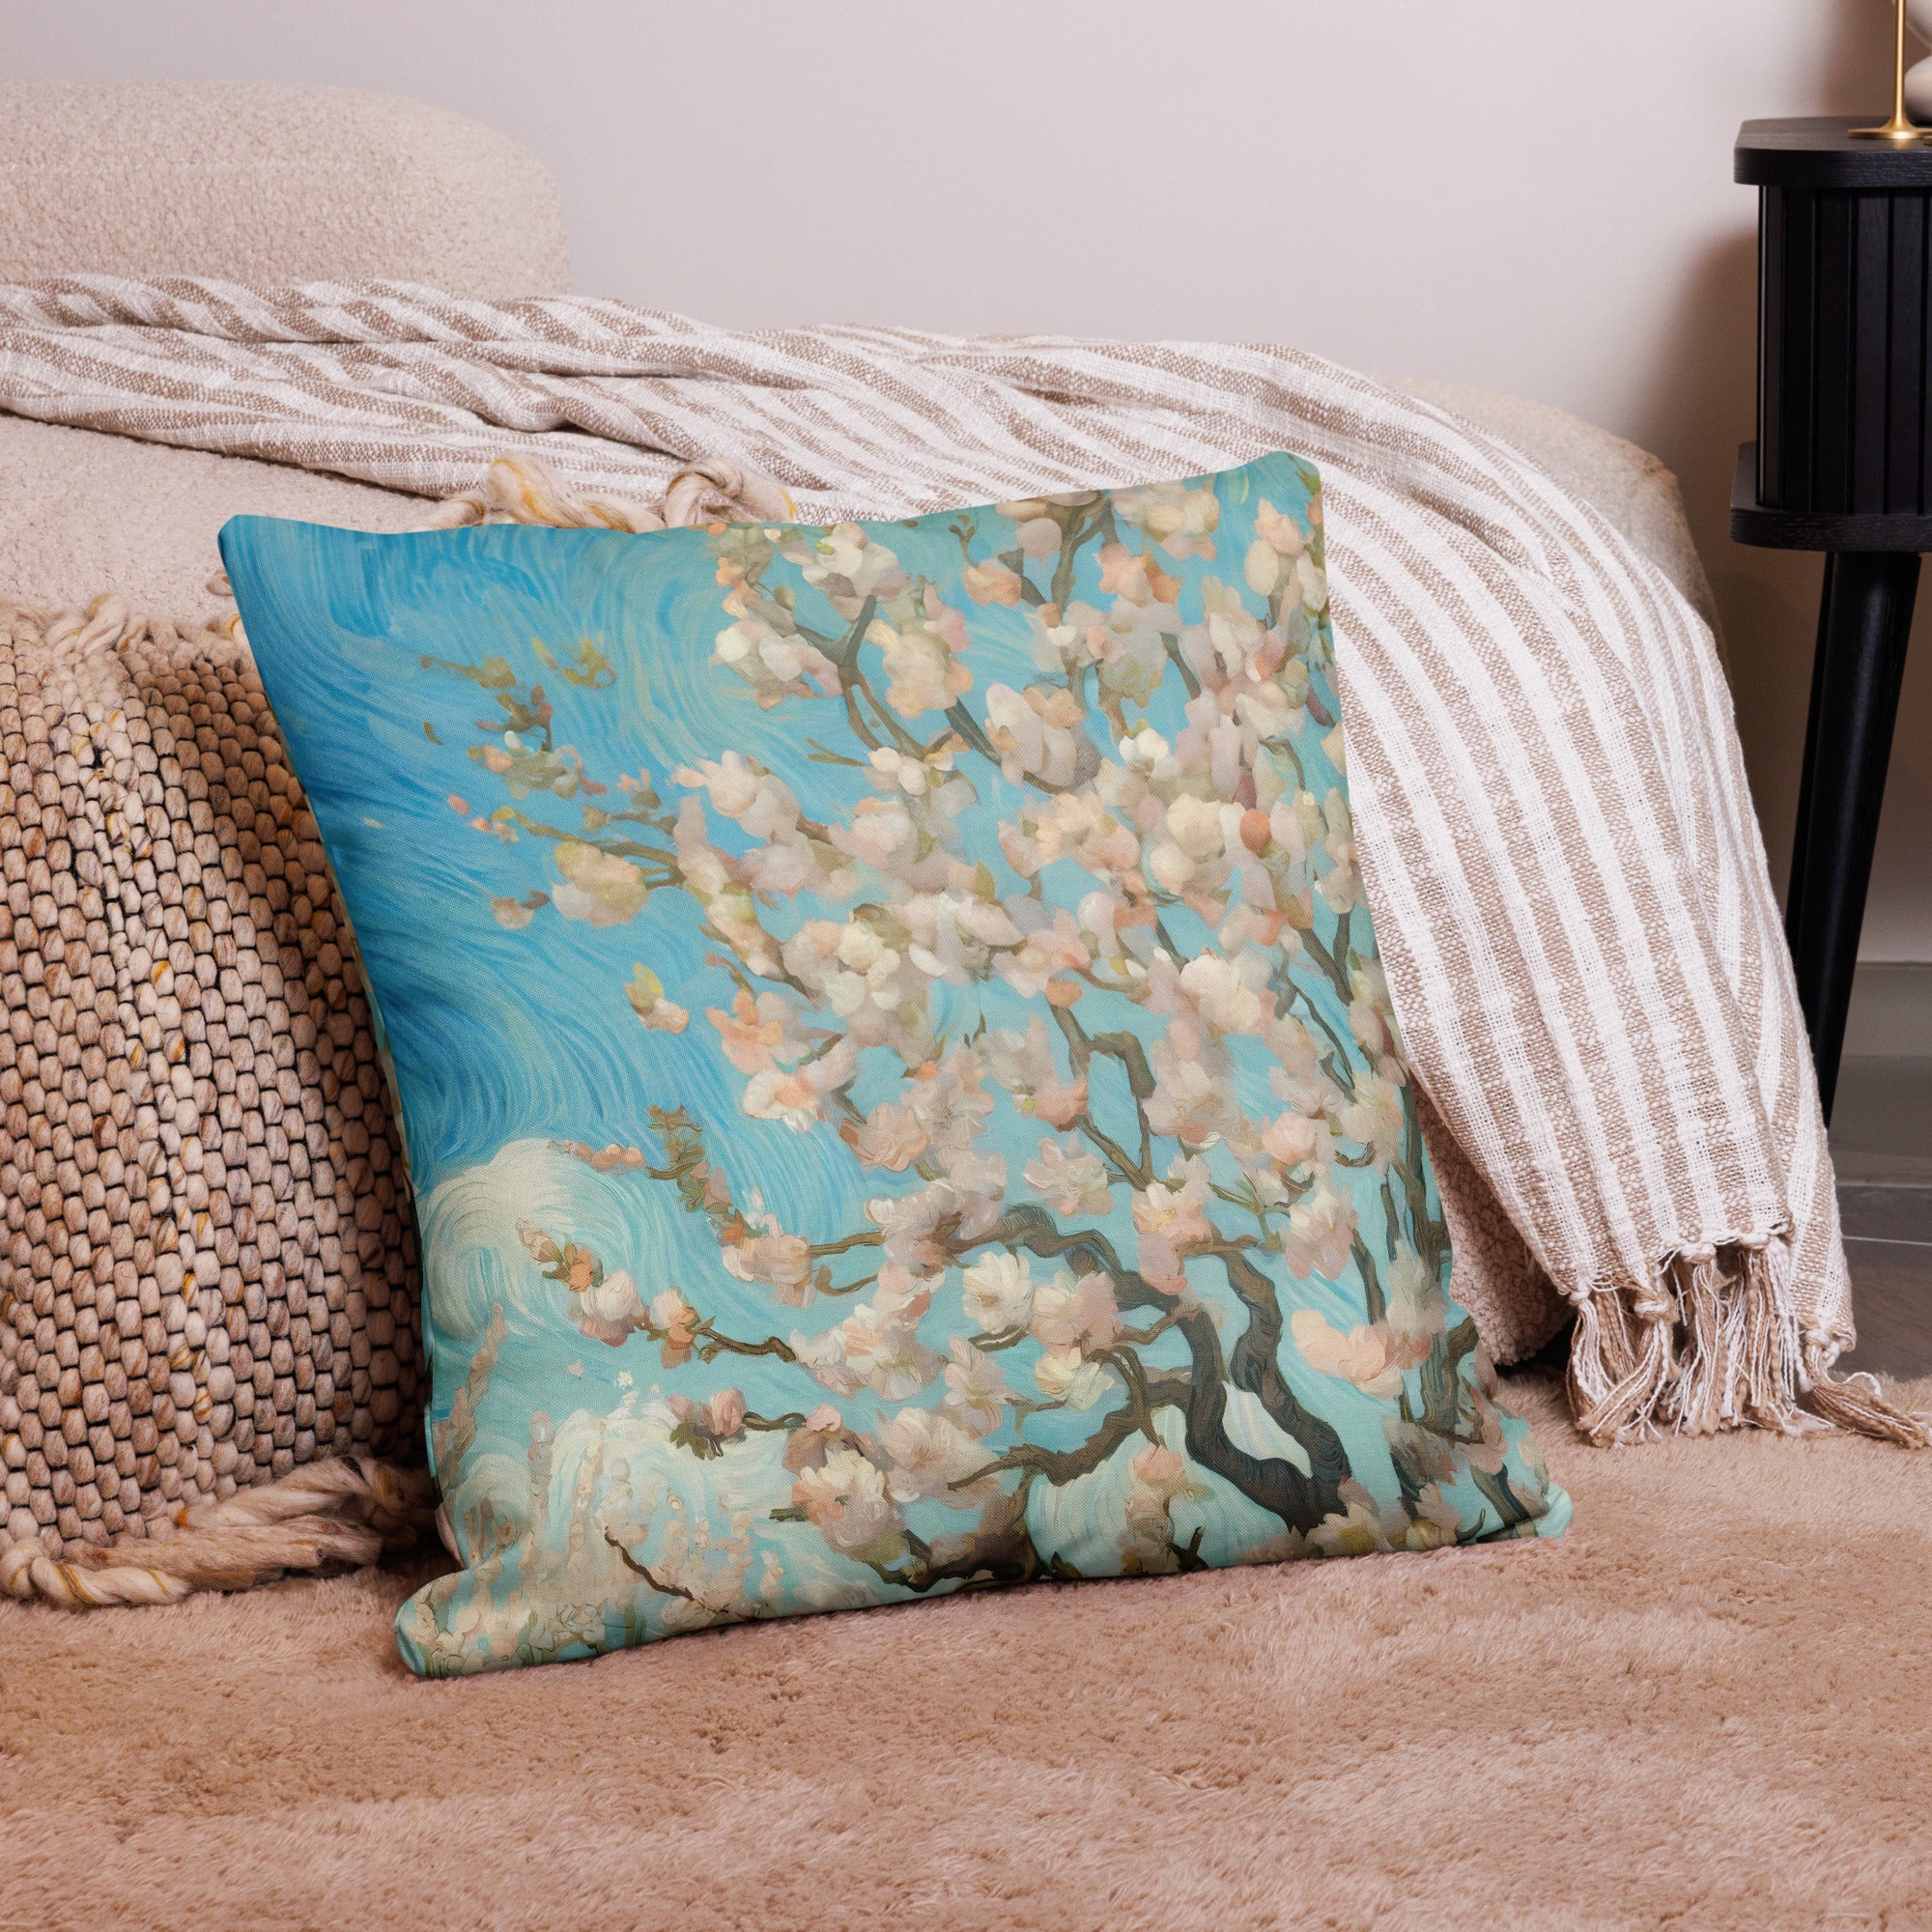 Vincent van Gogh 'Orchard in Blossom' Famous Painting Premium Pillow | Premium Art Cushion